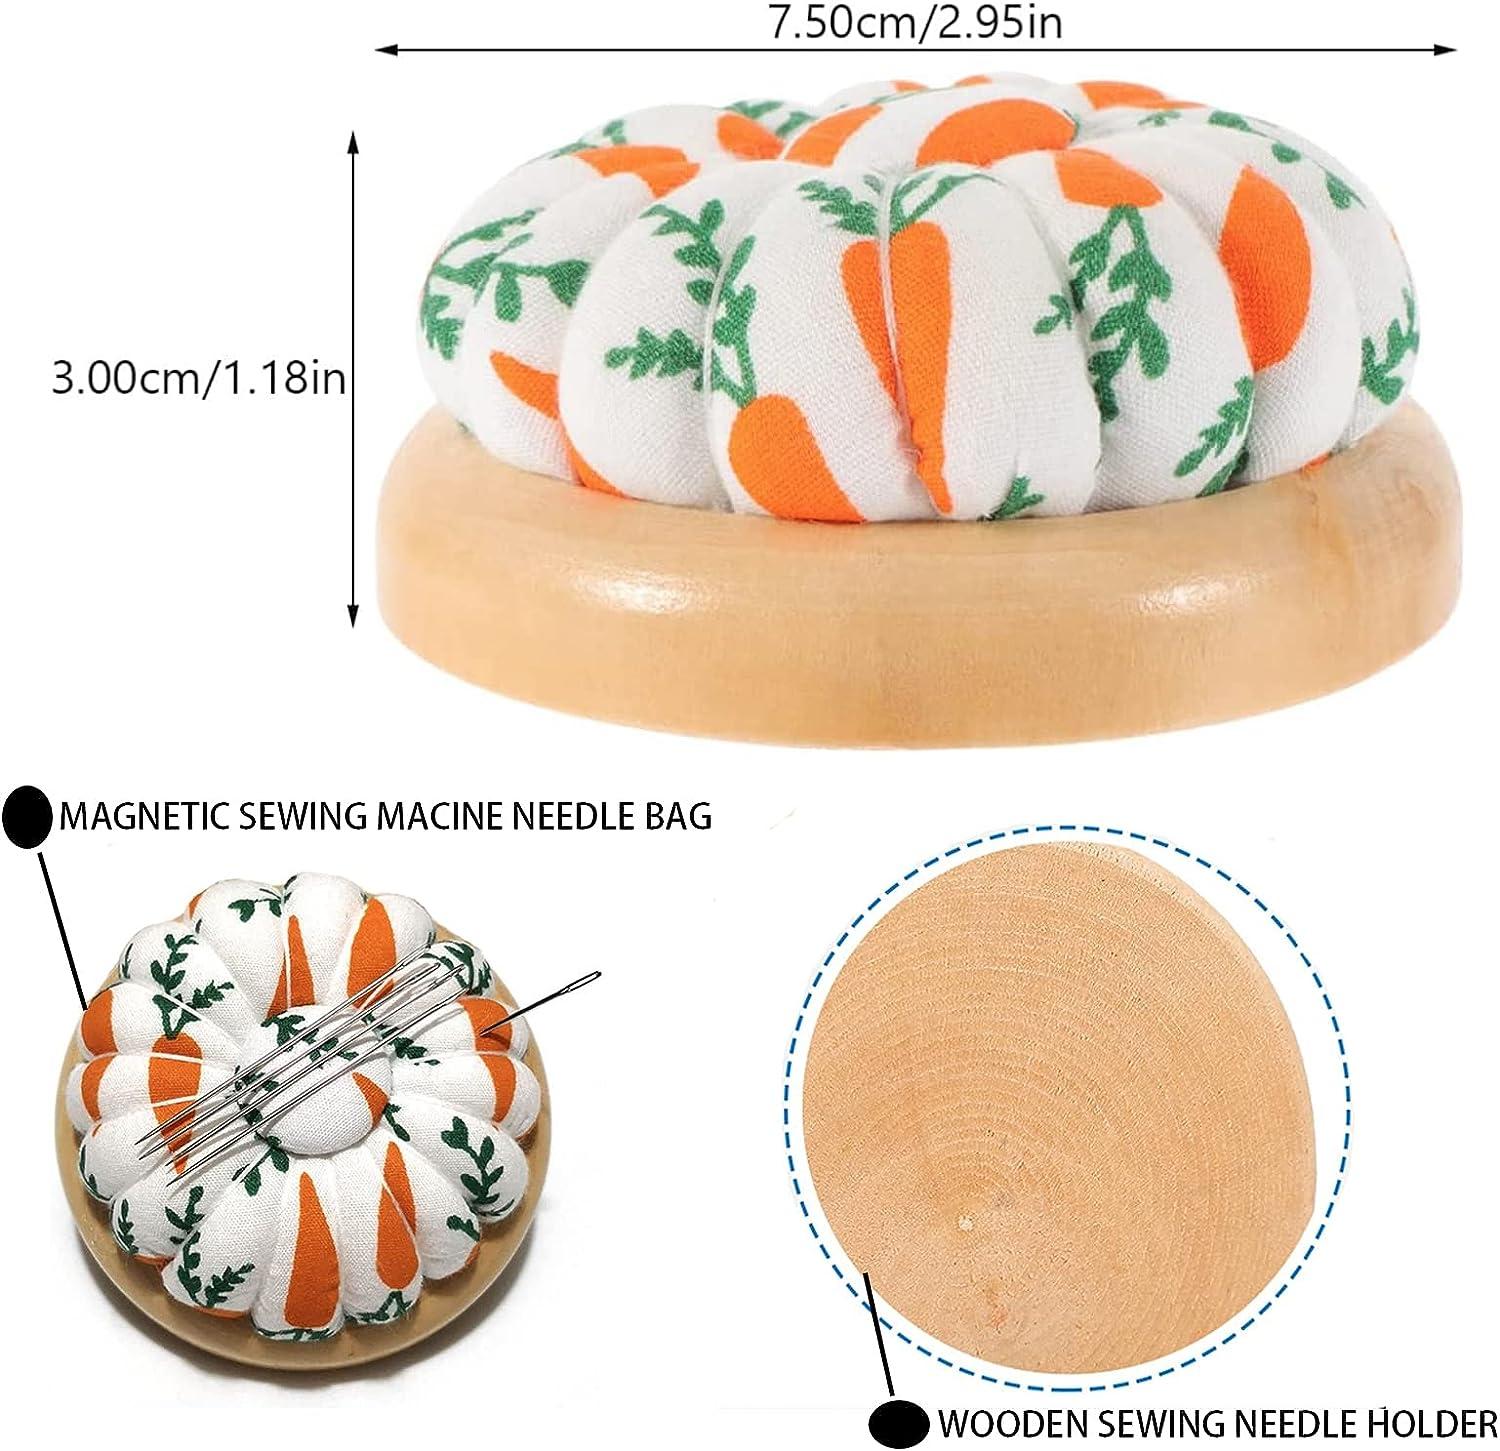  SEWACC 16 Pcs Wrist Pin Bag Pin Cushions for Sewing Elastic  Straps Sewing Pin Cushion Crushed Walnut Shells for Pincushions Walnut  Shells for Crafts Elastic Band Daily Use Cotton